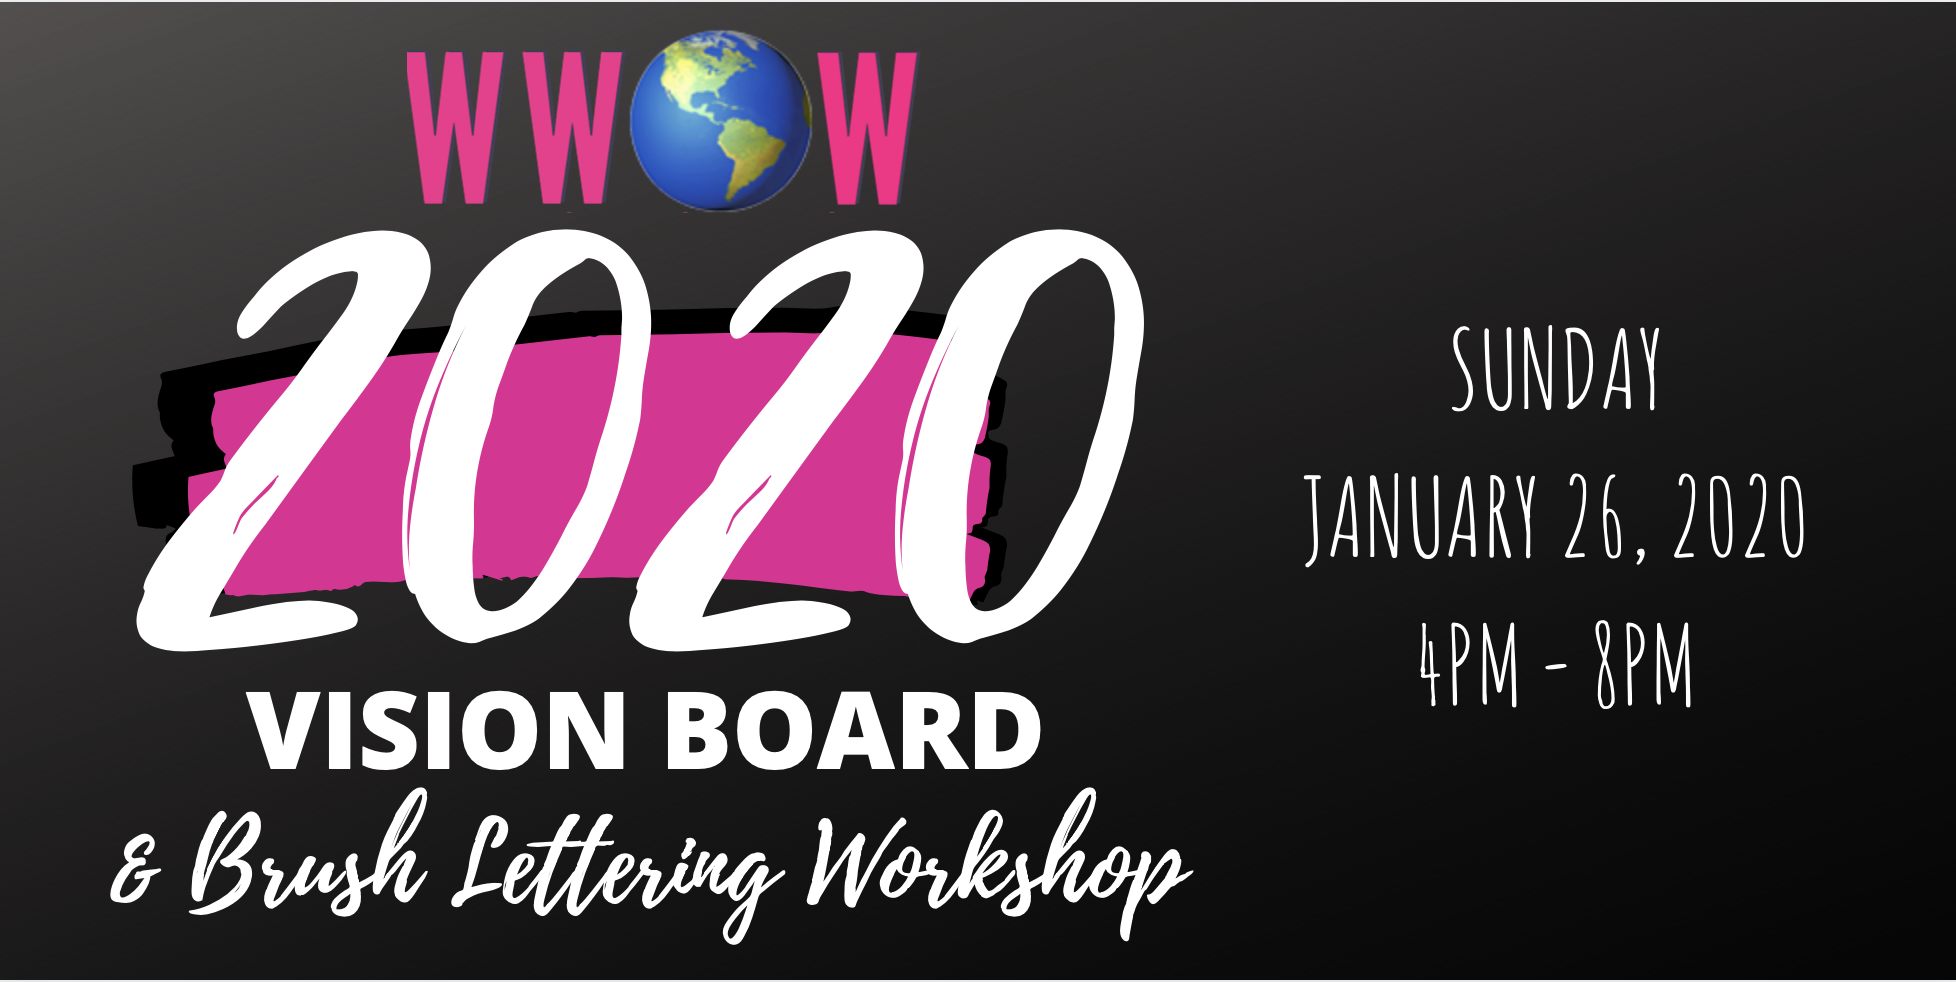 WWOW 2020 Vision Board & Brush Lettering Workshop